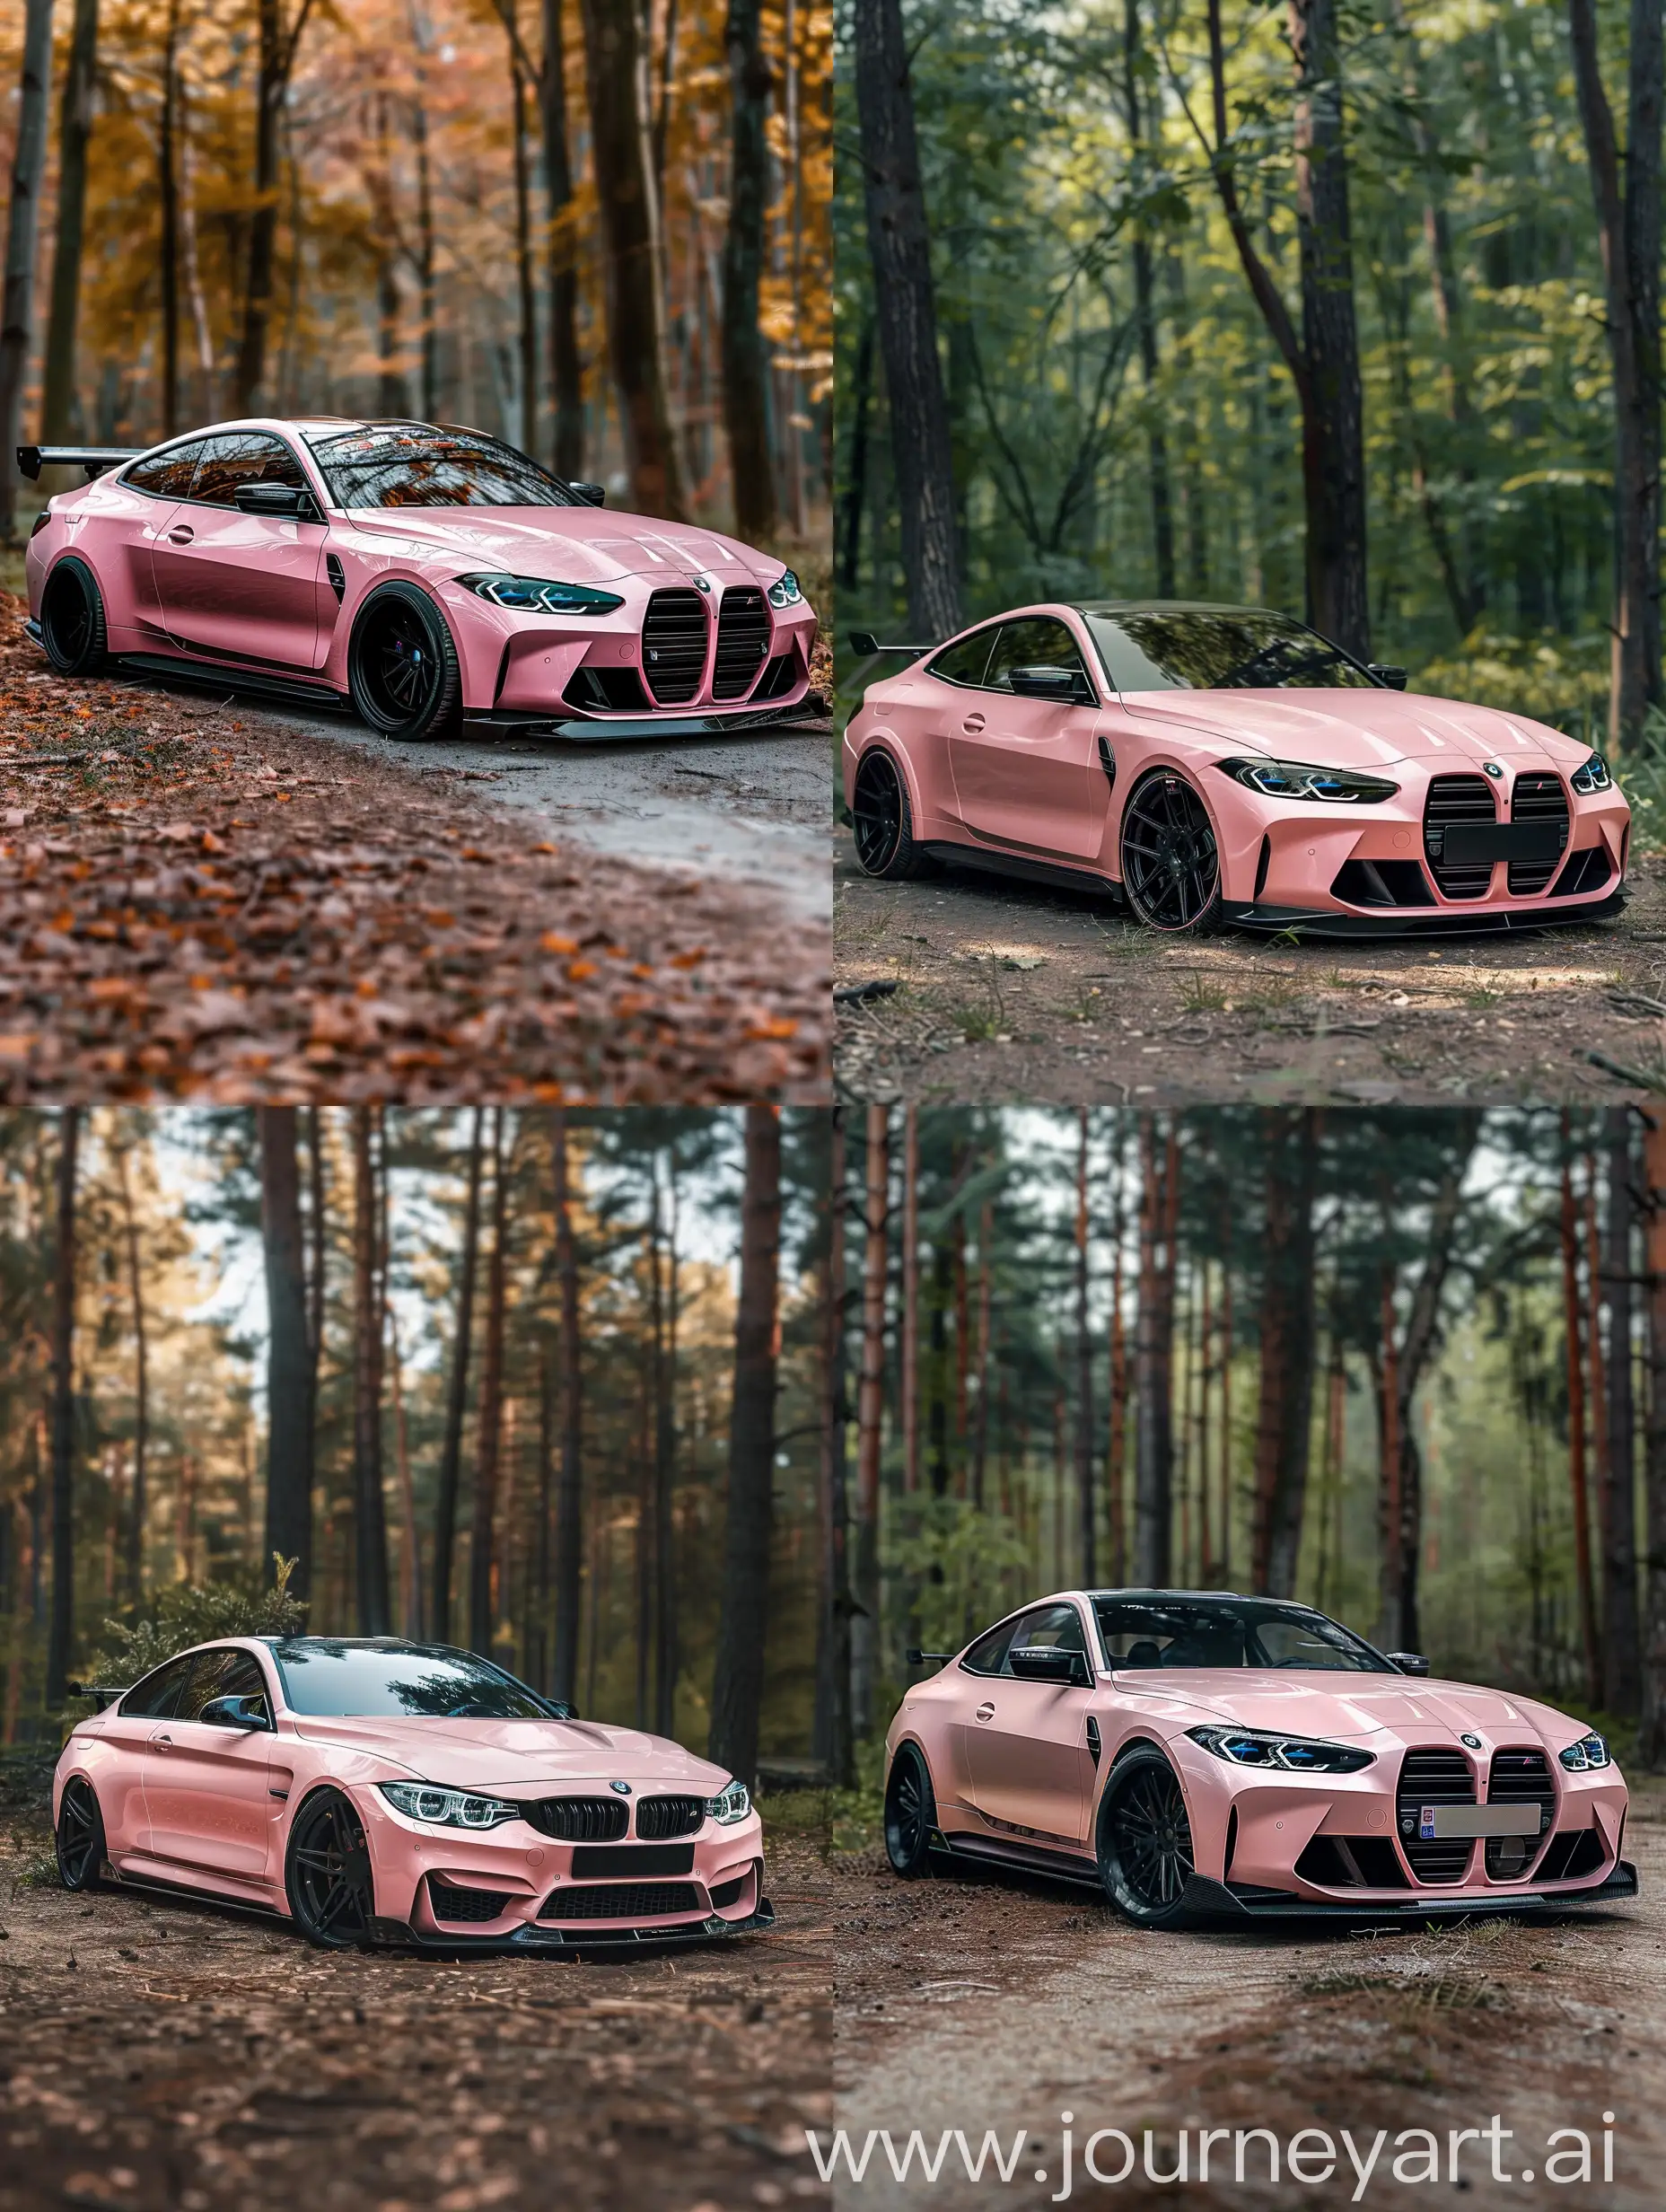 Bmw m4 2024 in roze met zwarte velgen met grote bodykit op wallpaper Instagram style foto in bos snapchat style foto cs m4 realistic 